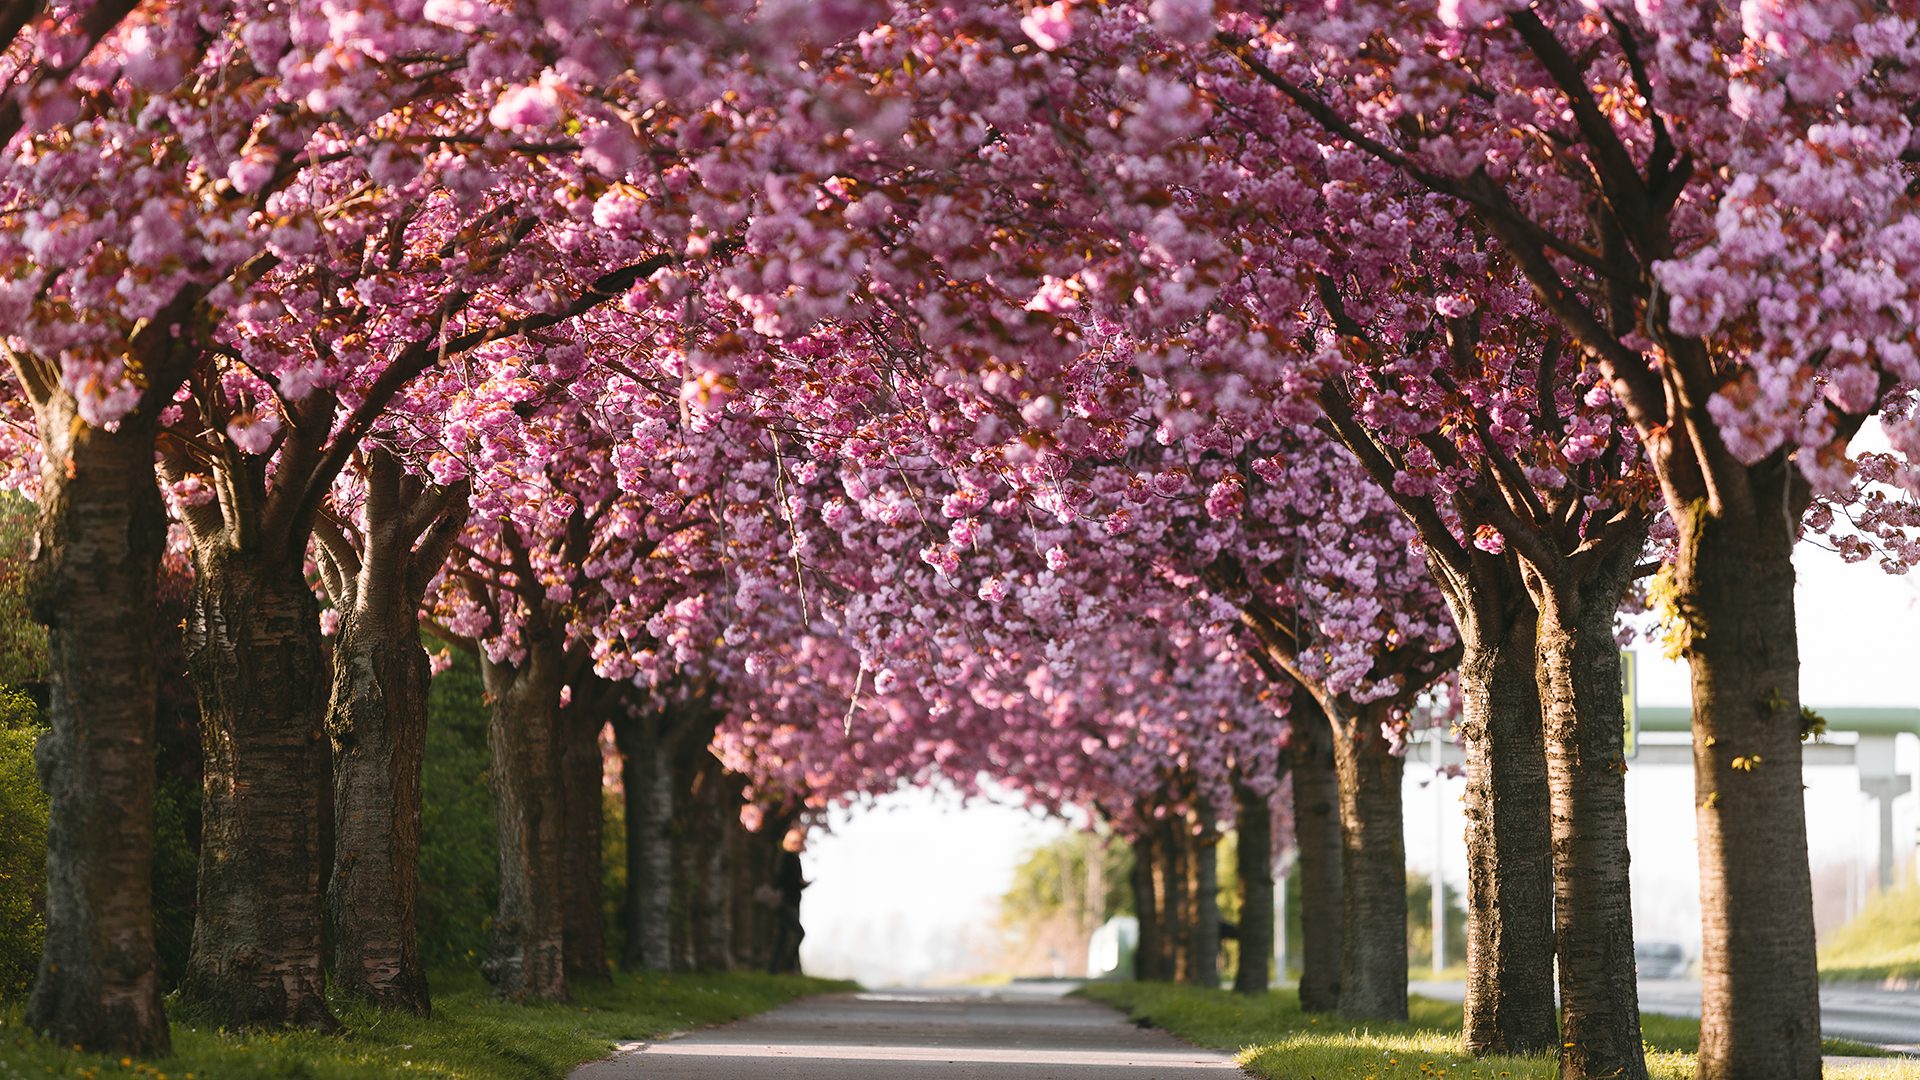 Cherry blossom on Holzweg, image by Felix Meyer, GNTB